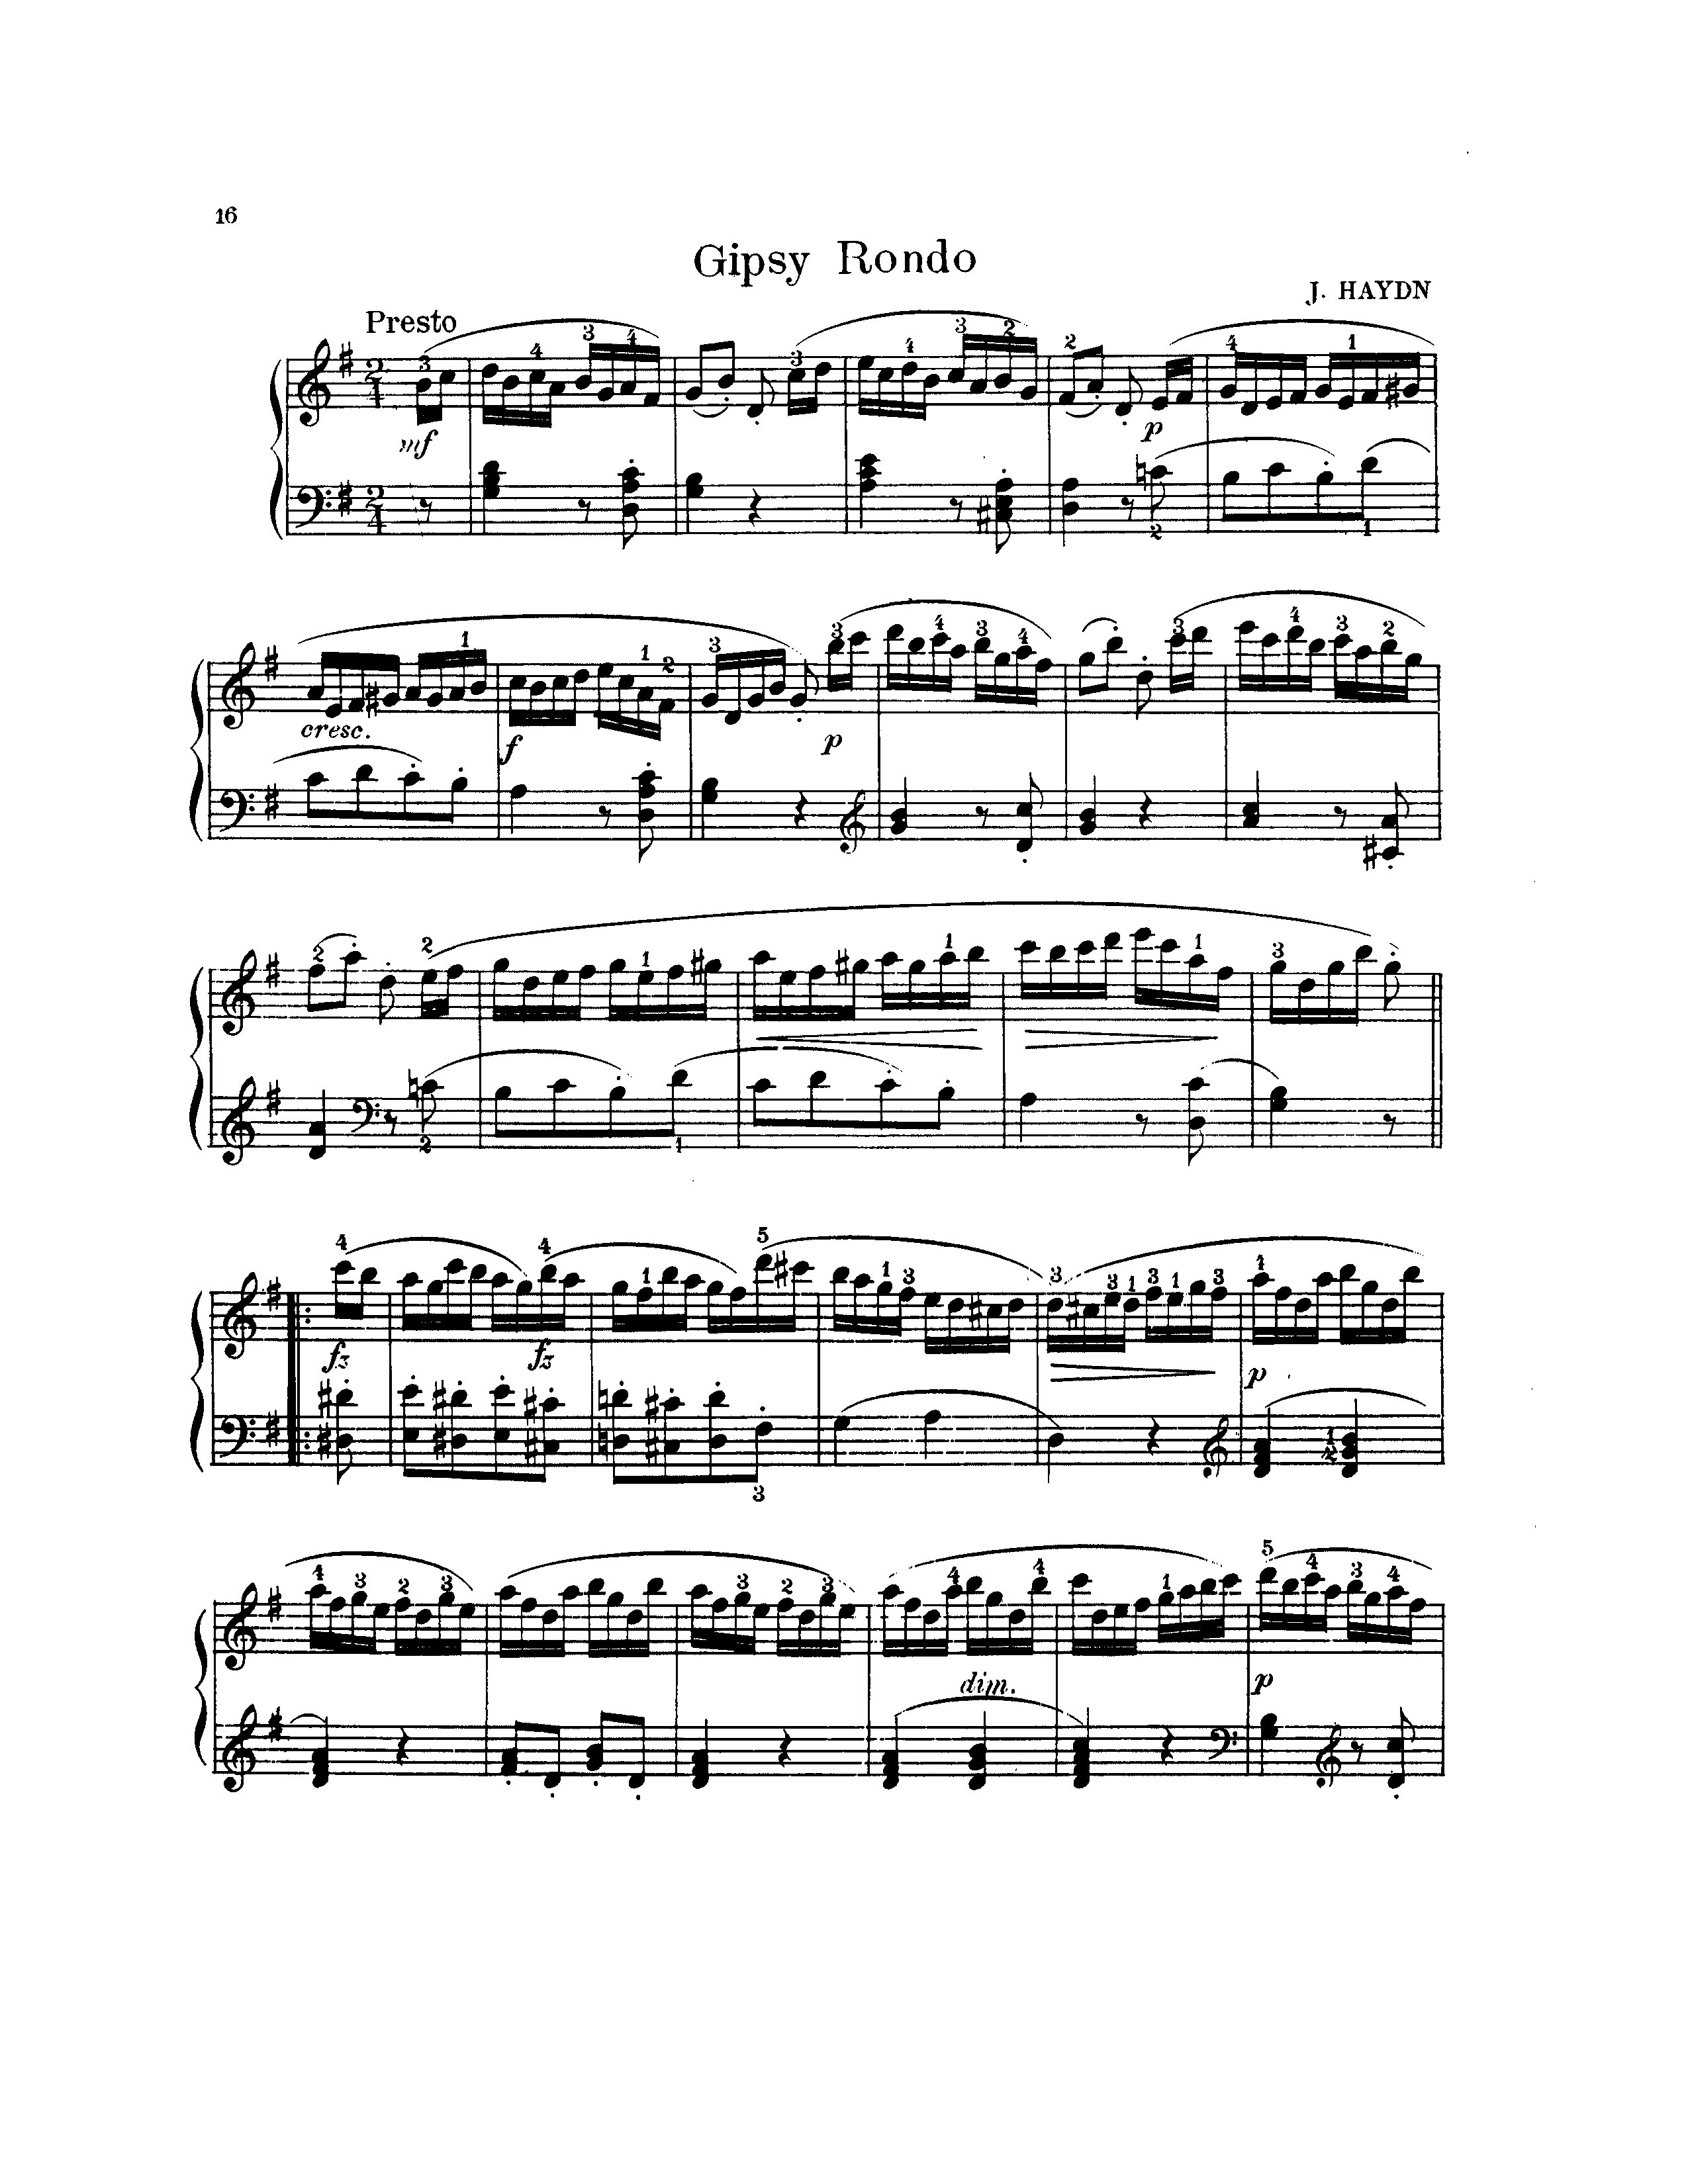 Gypsy Rondo in G major Score